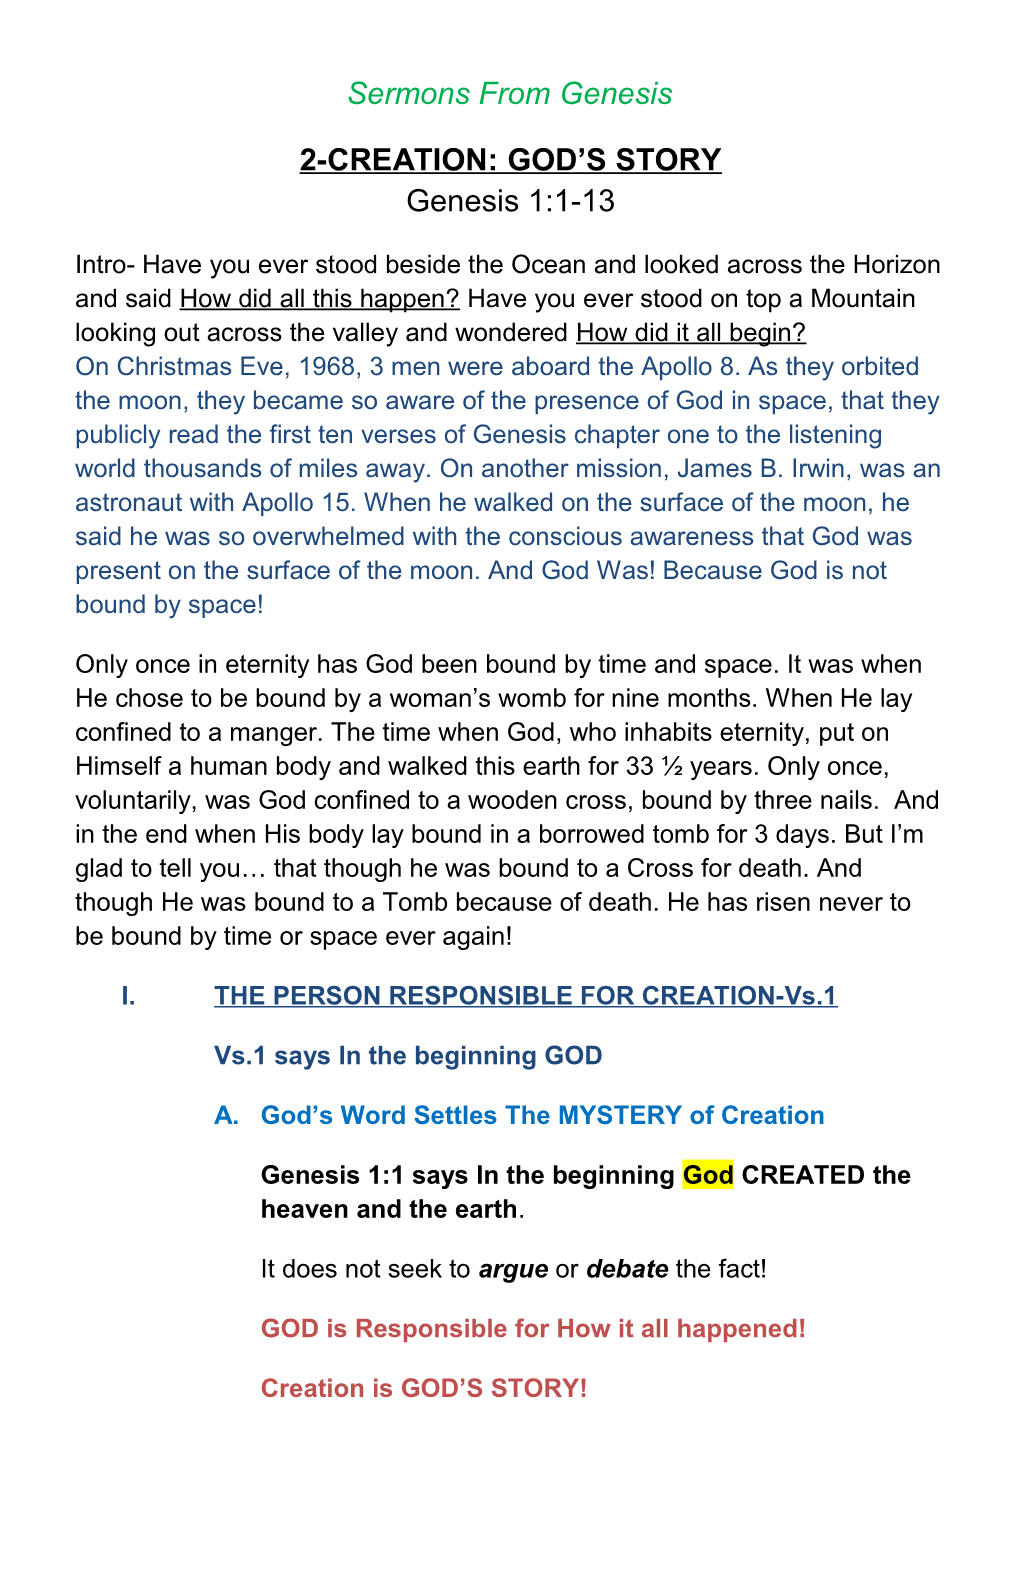 2-CREATION: GOD S STORY Genesis 1:1-13